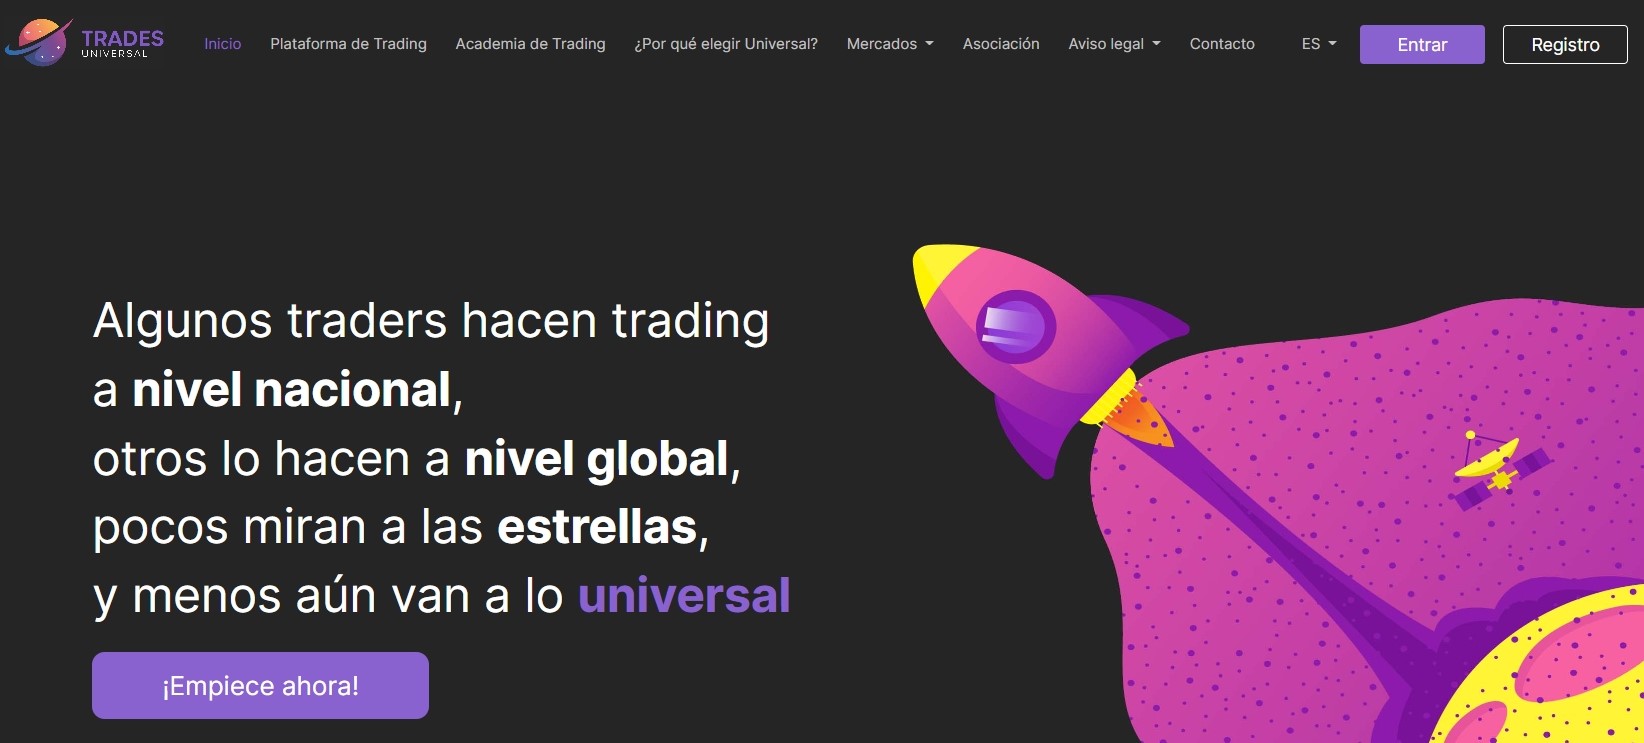 Trades Universal página web